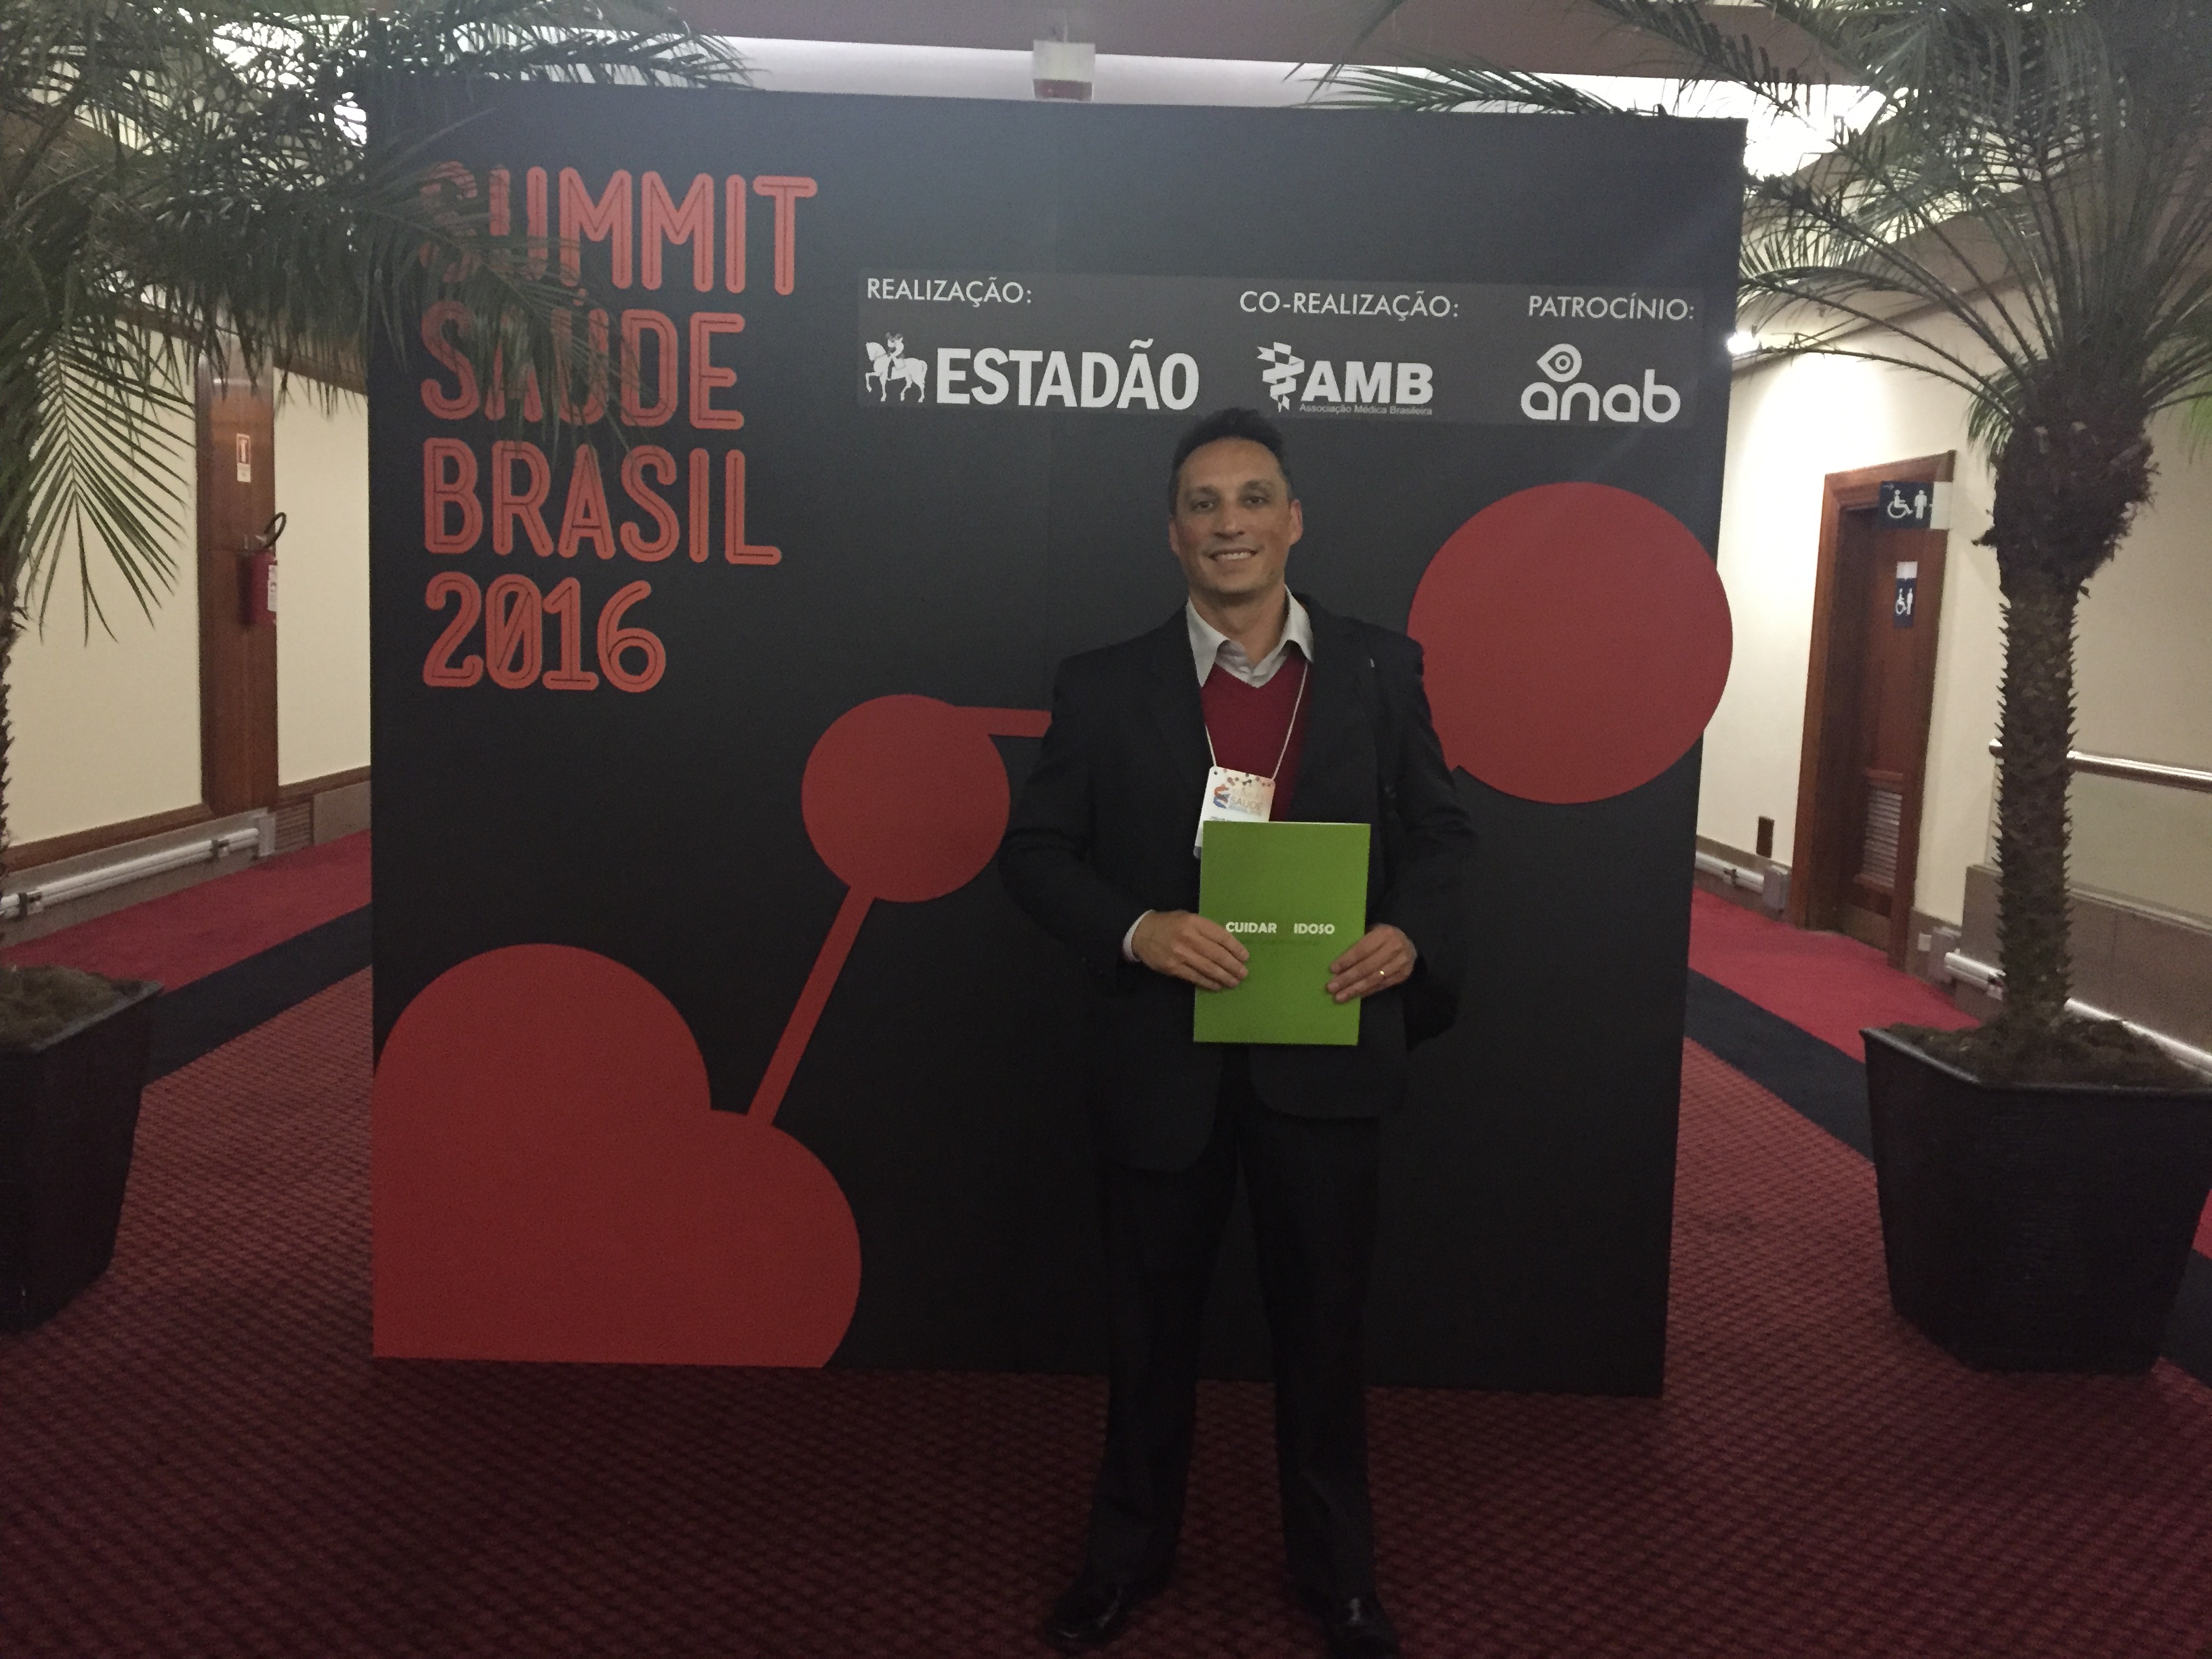 Cuidar Idoso no Summit Sade 2016